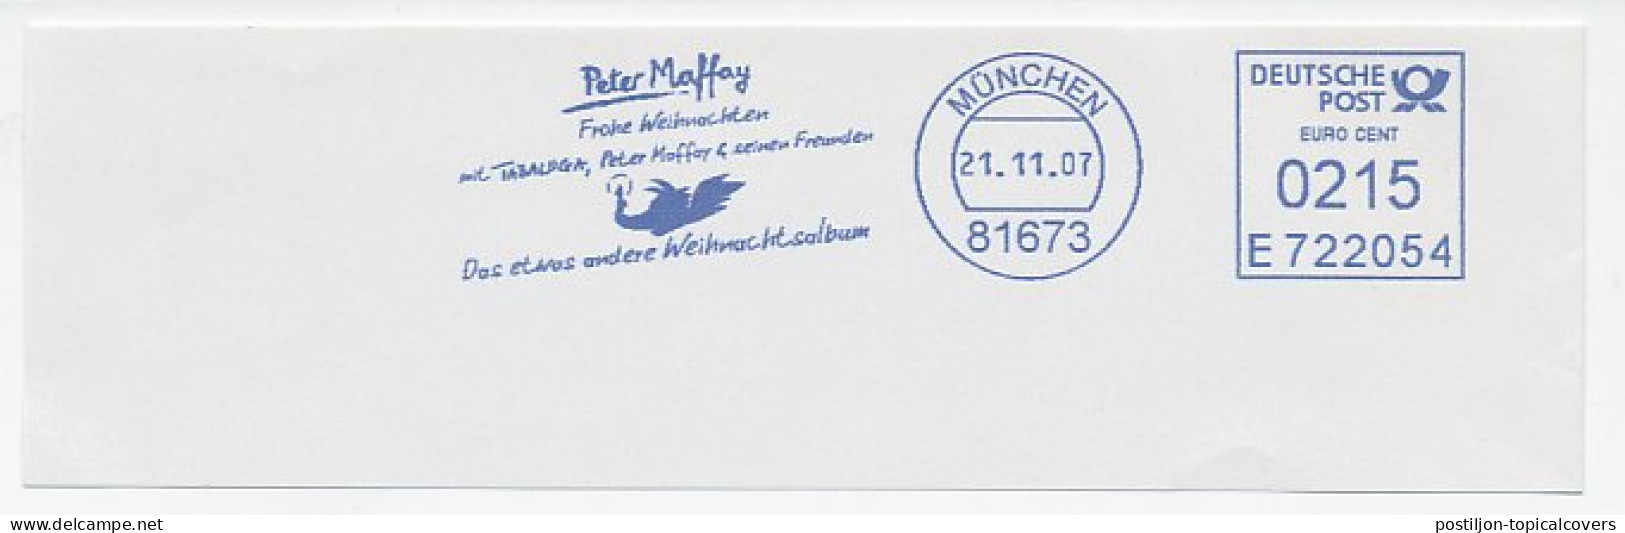 Meter Cut Germany 2007 Peter Maffay - Christmas Album - Music